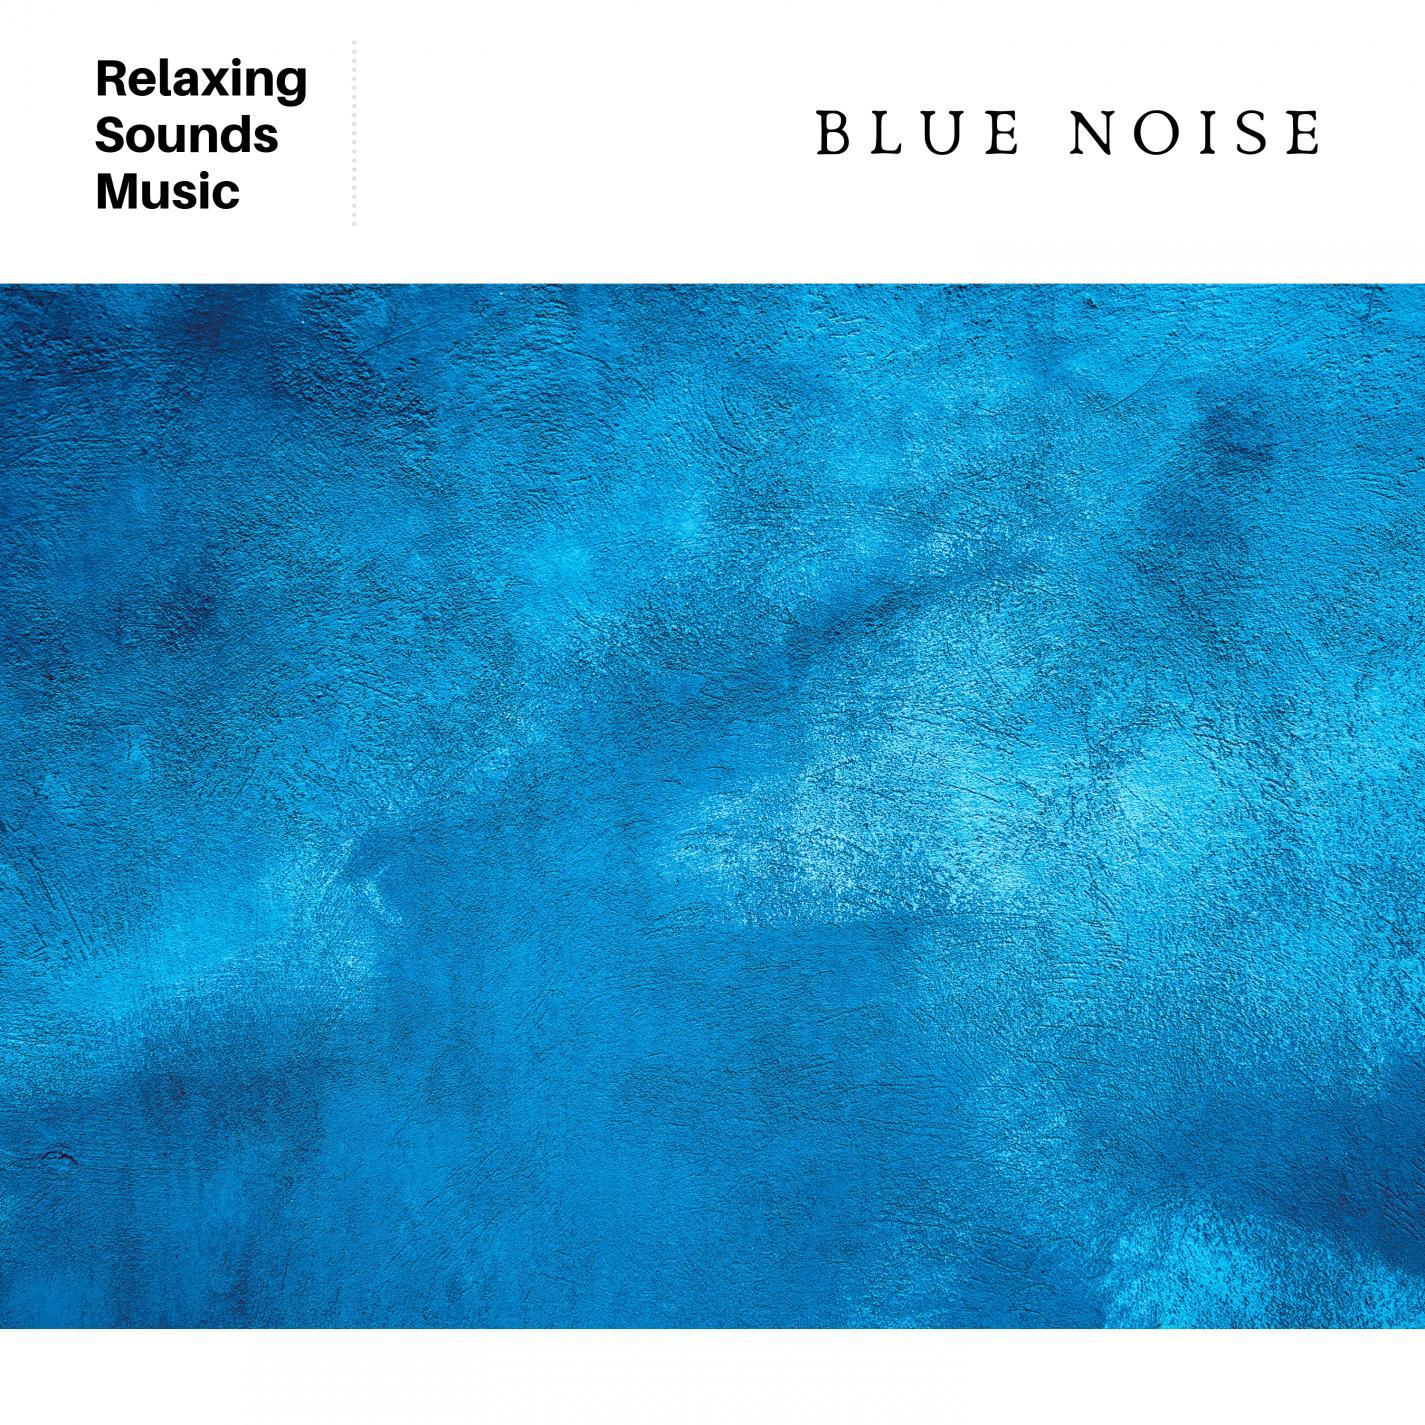 Very Deep Blue Noise